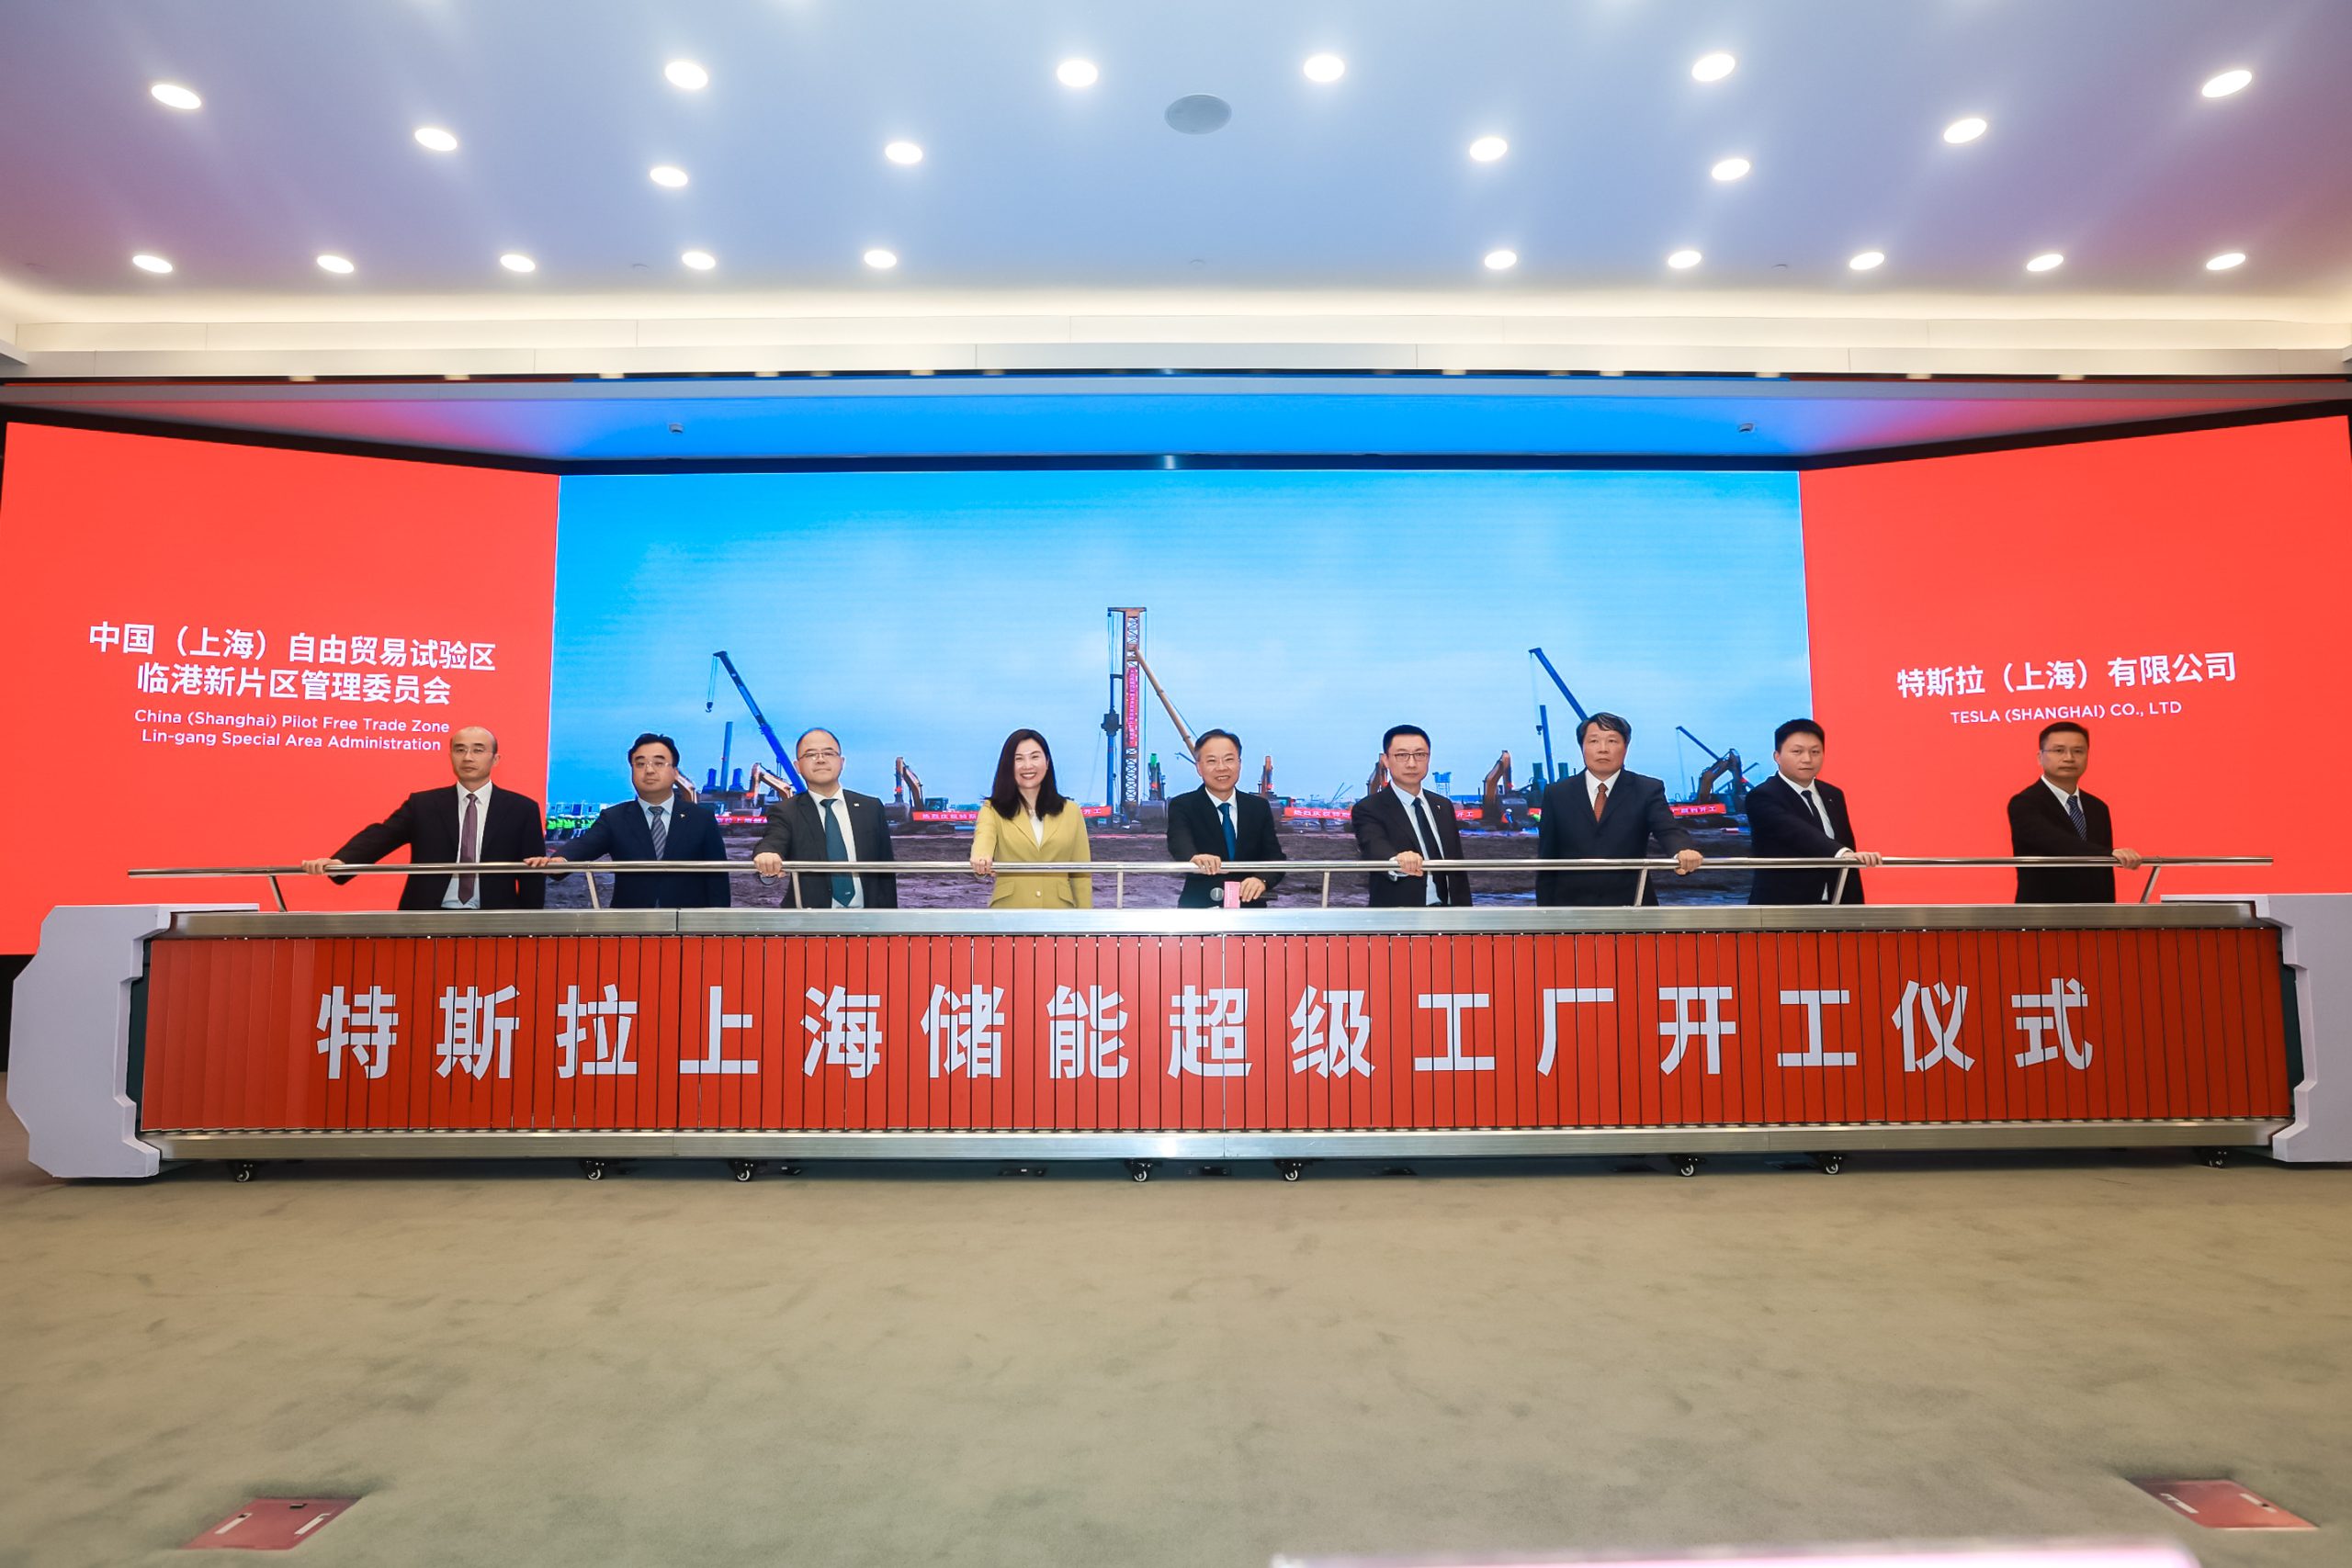 Tesla Shanghai Megafactory in China officially starts construction